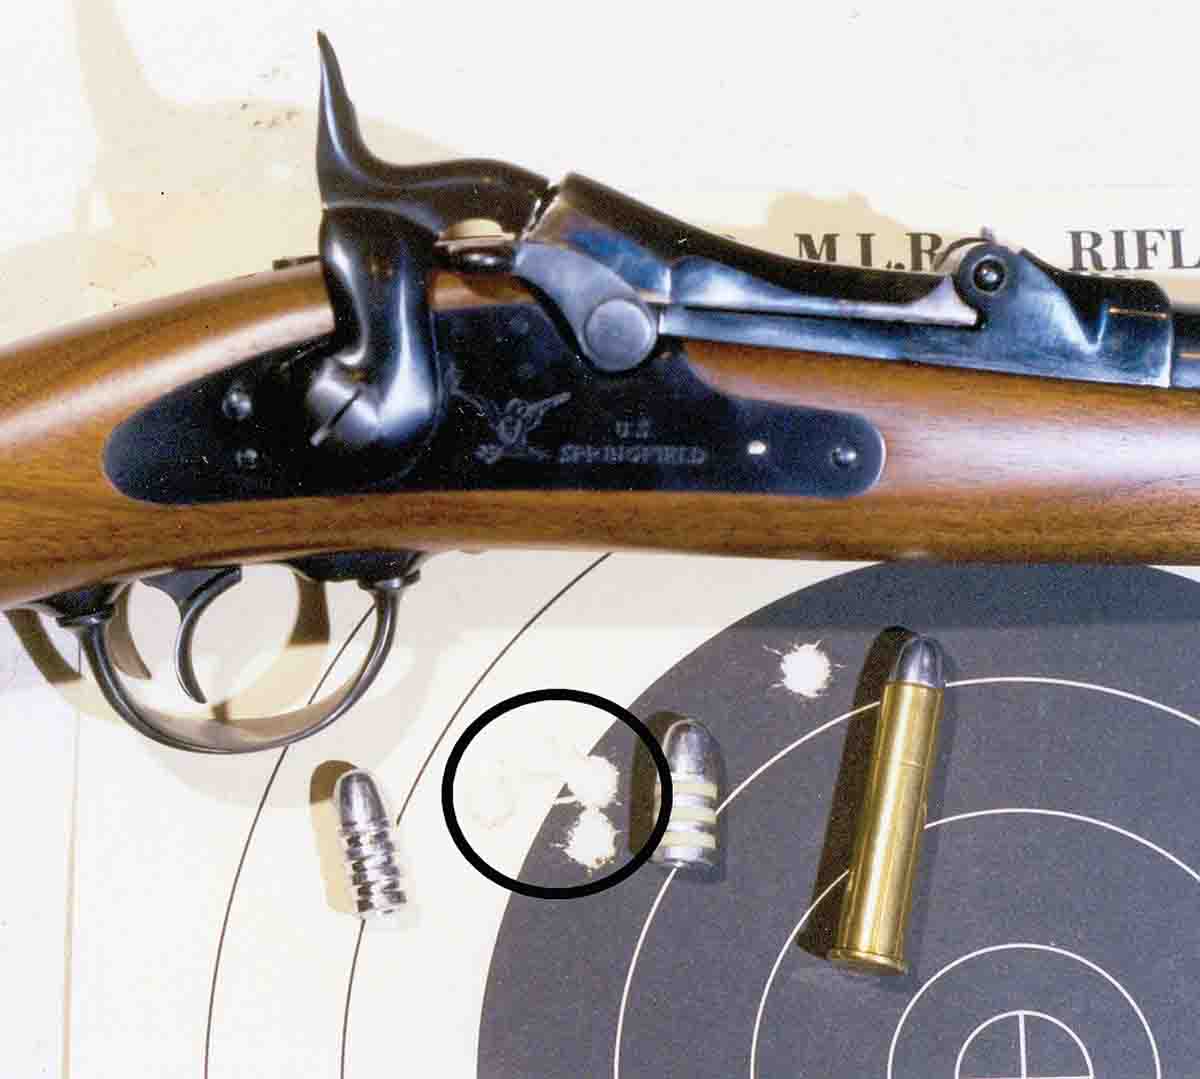 Five-shot group of Model 1886 carbine loads fired in 1873 Pedersoli carbine at 100 yards.